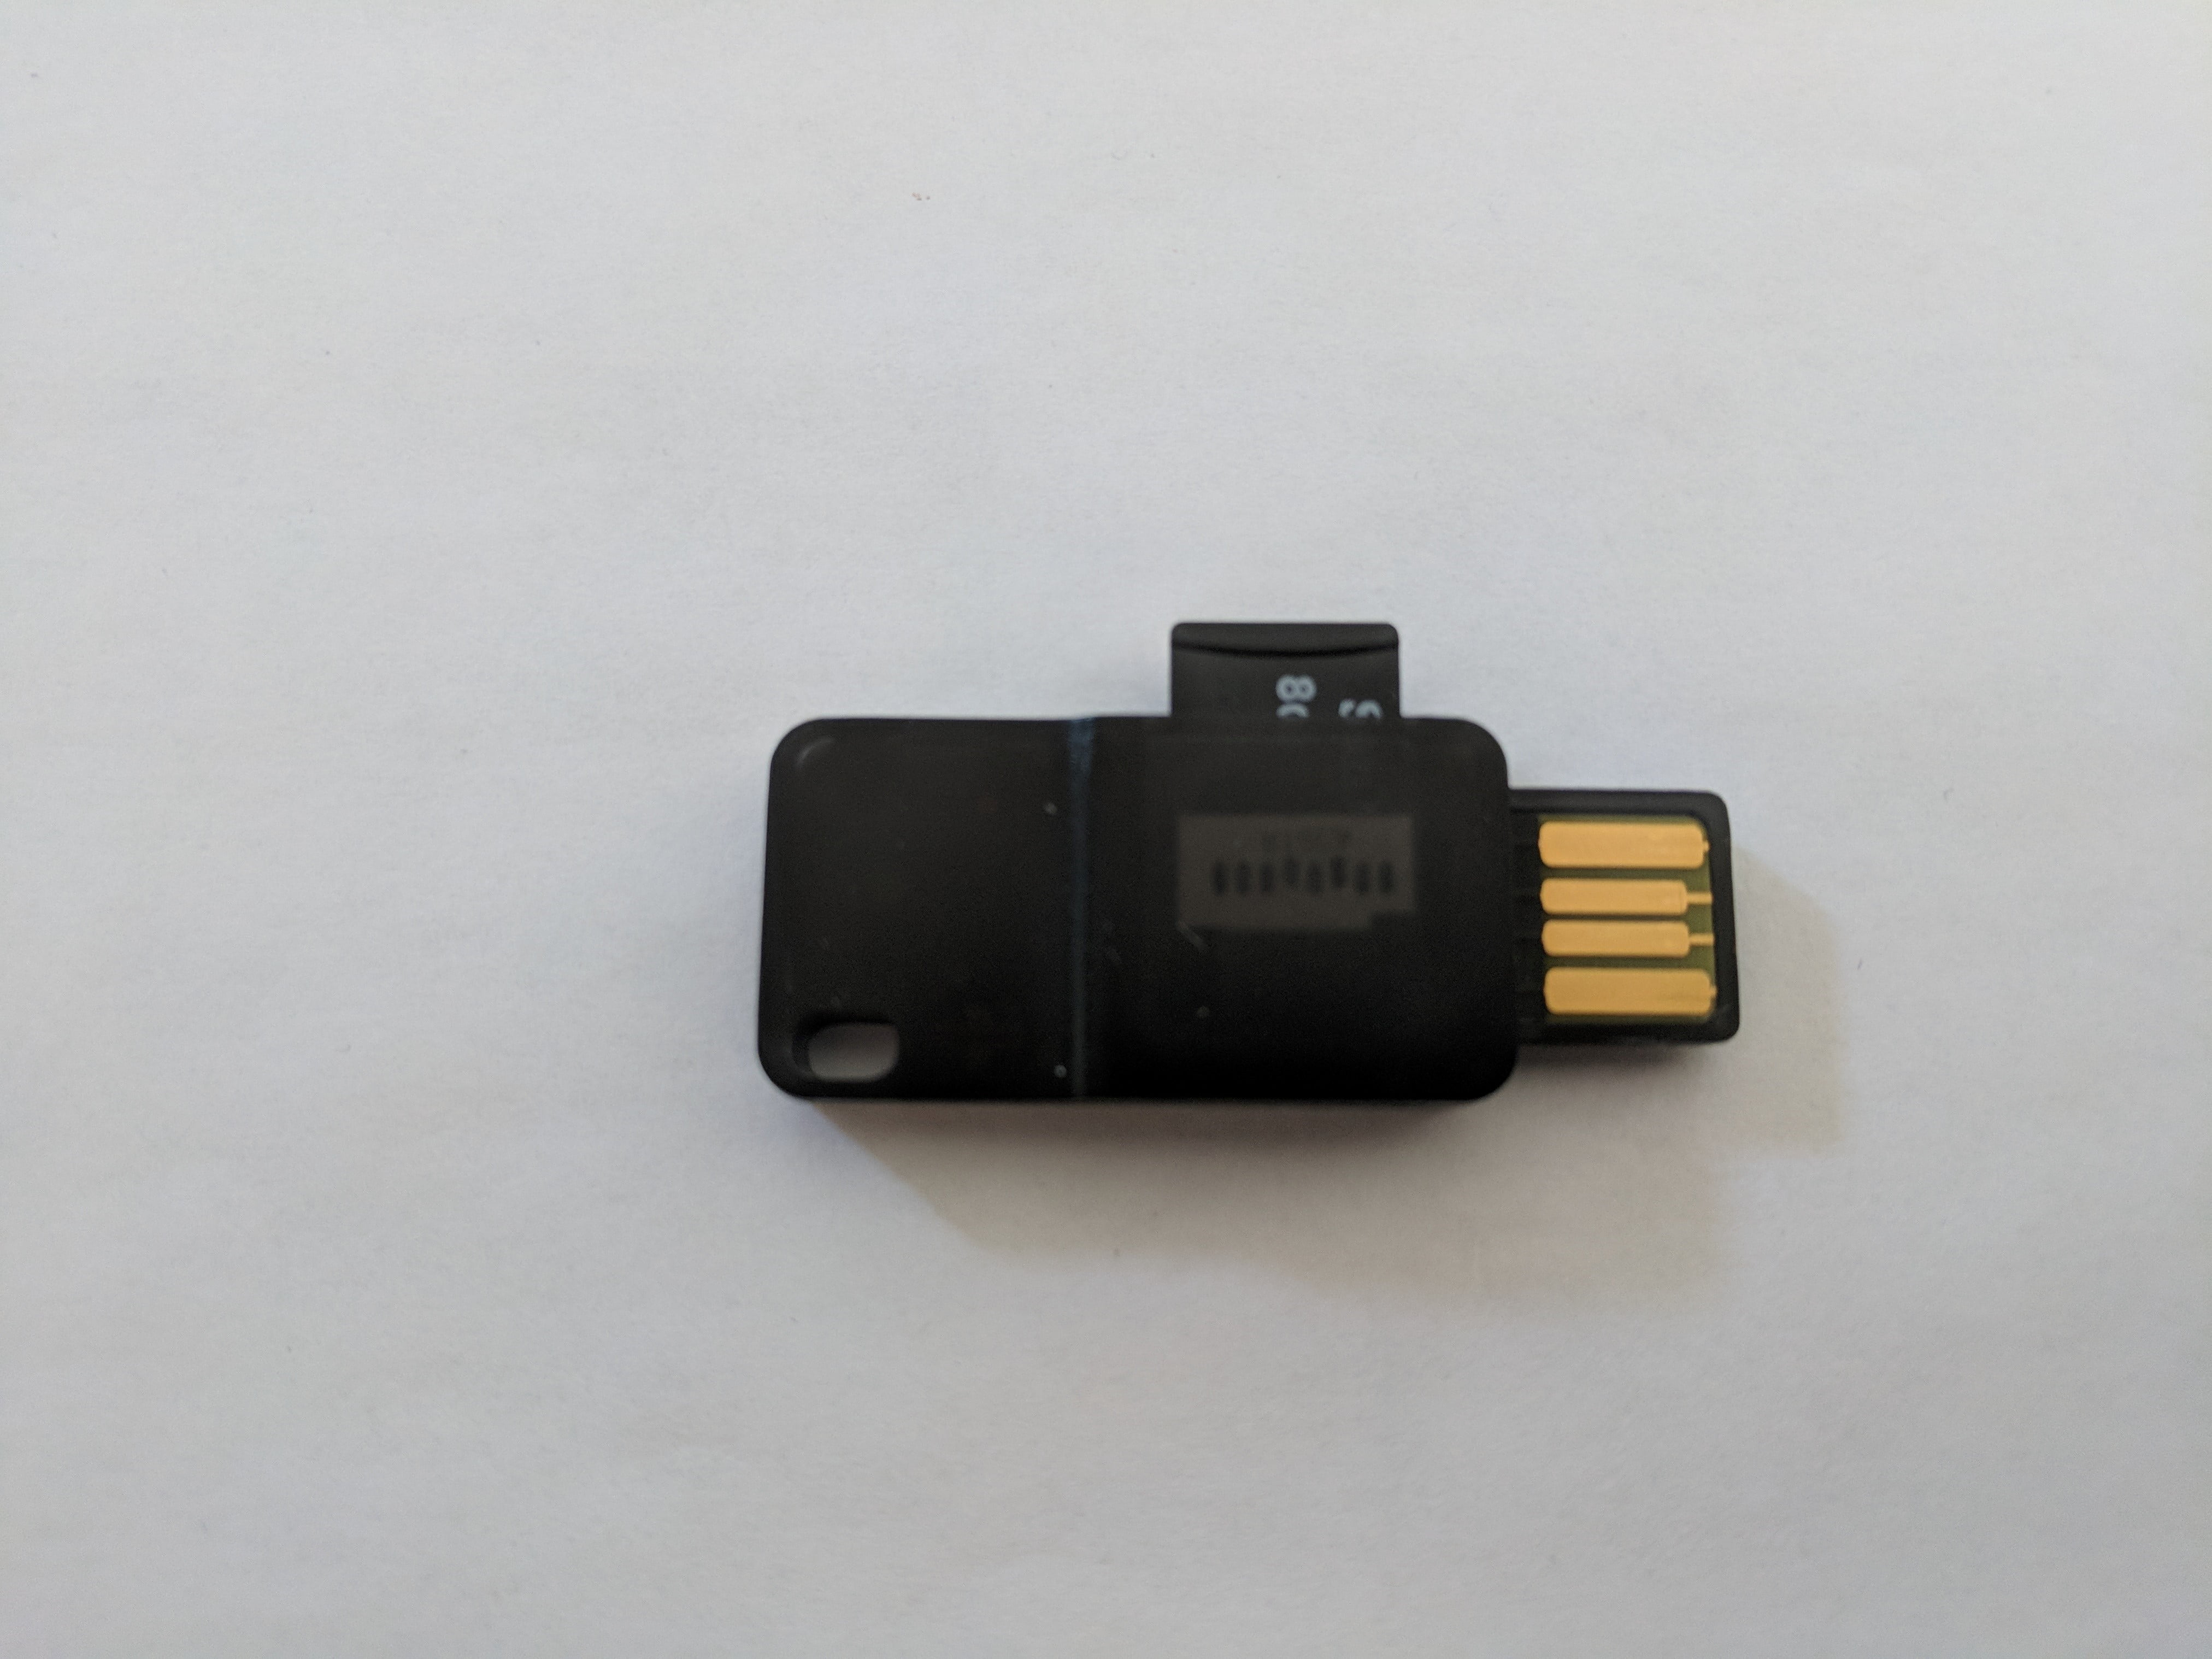 Digital Bitbox hardware wallet product shot